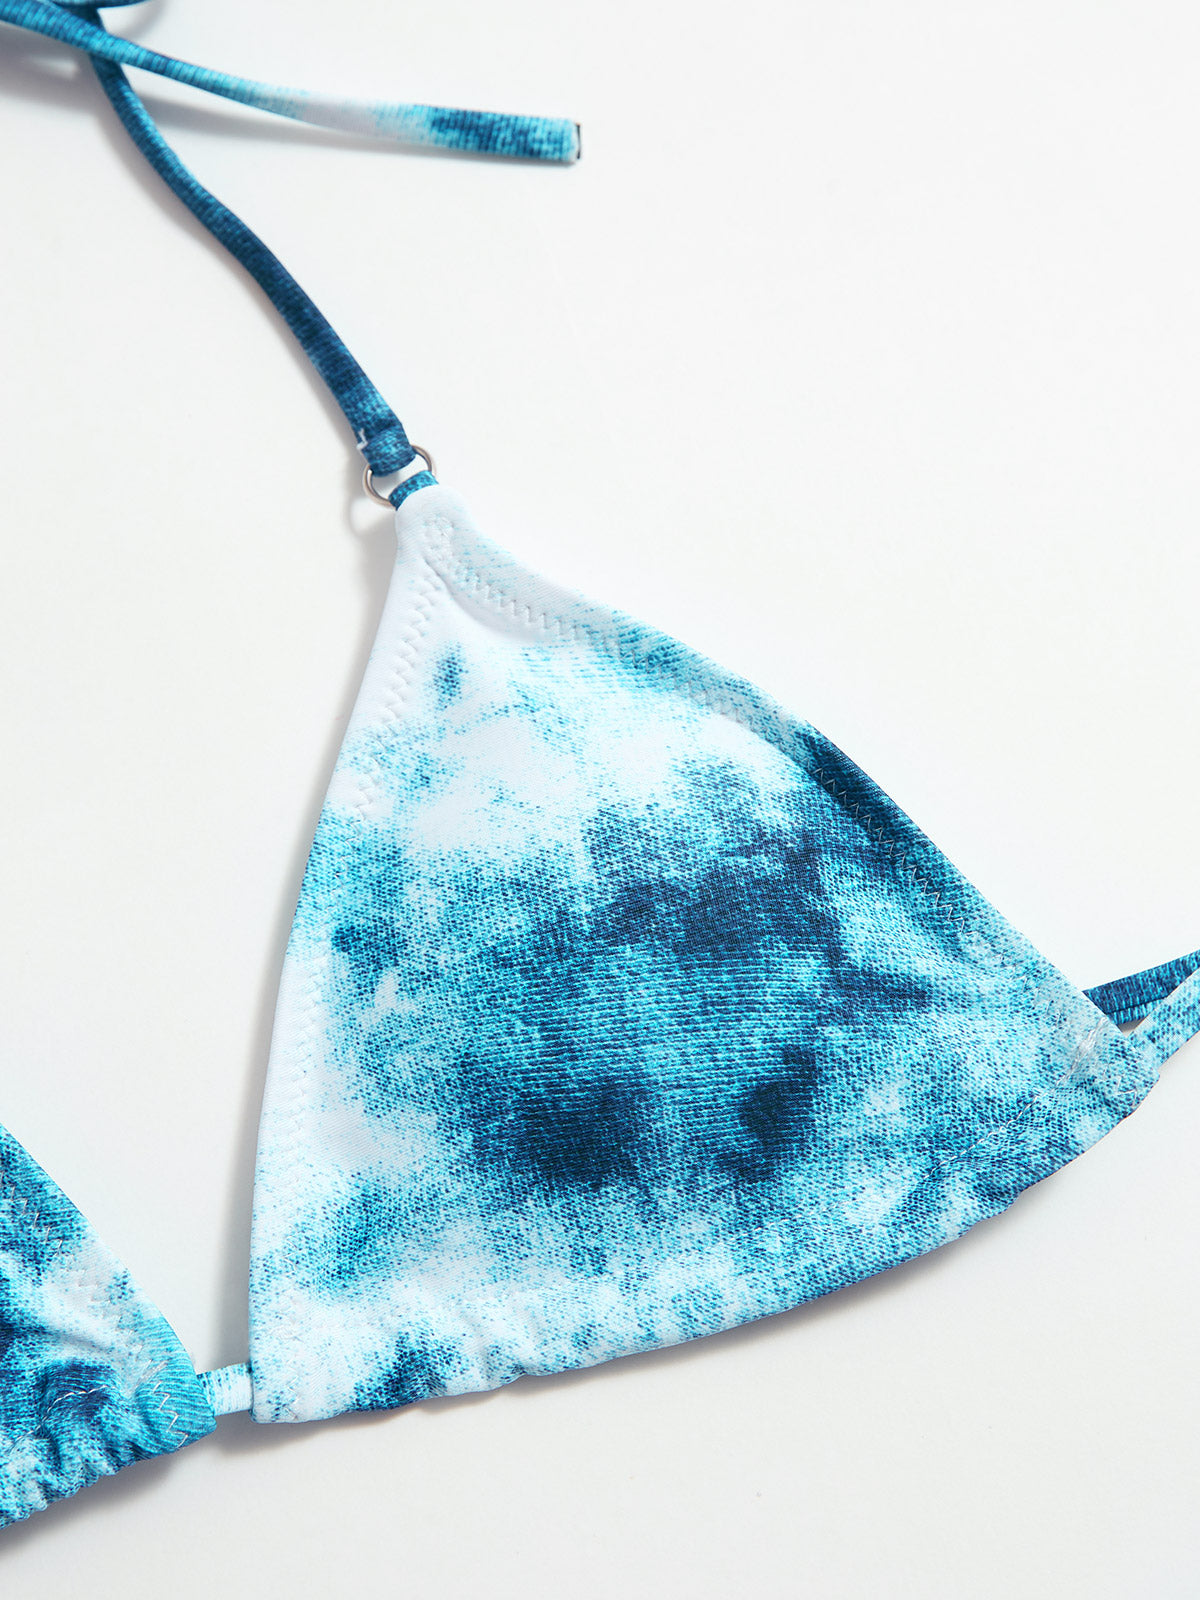 Tie-Dye Hanging Neck Lace Up Triangle Bikini